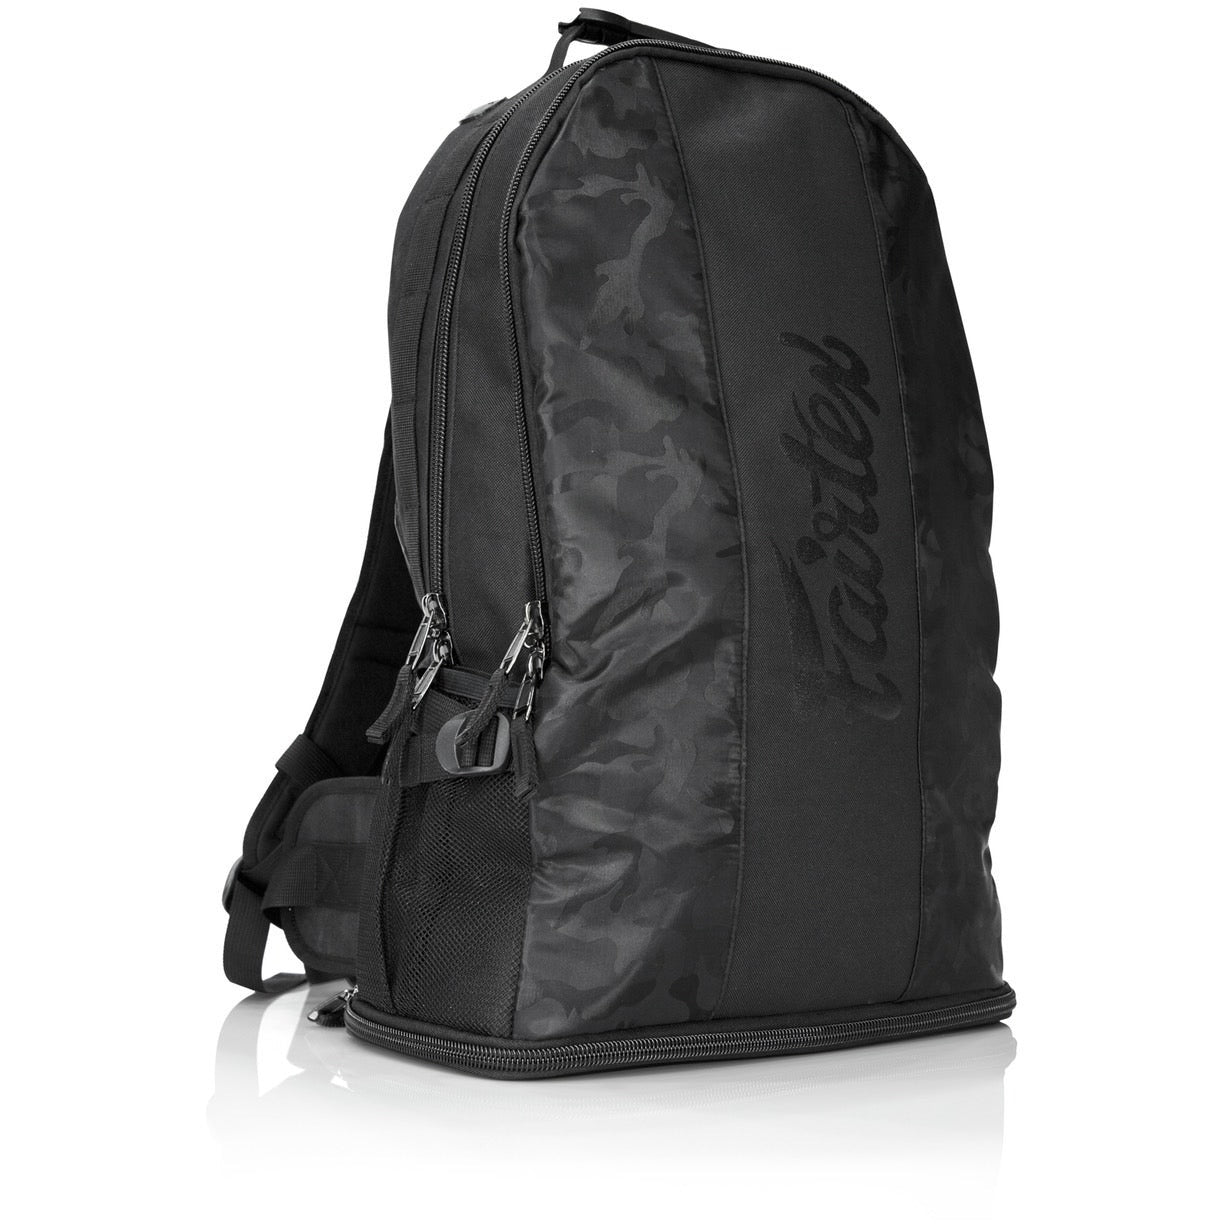 Fairtex Gym Bag / Backpack 4 Black Camo